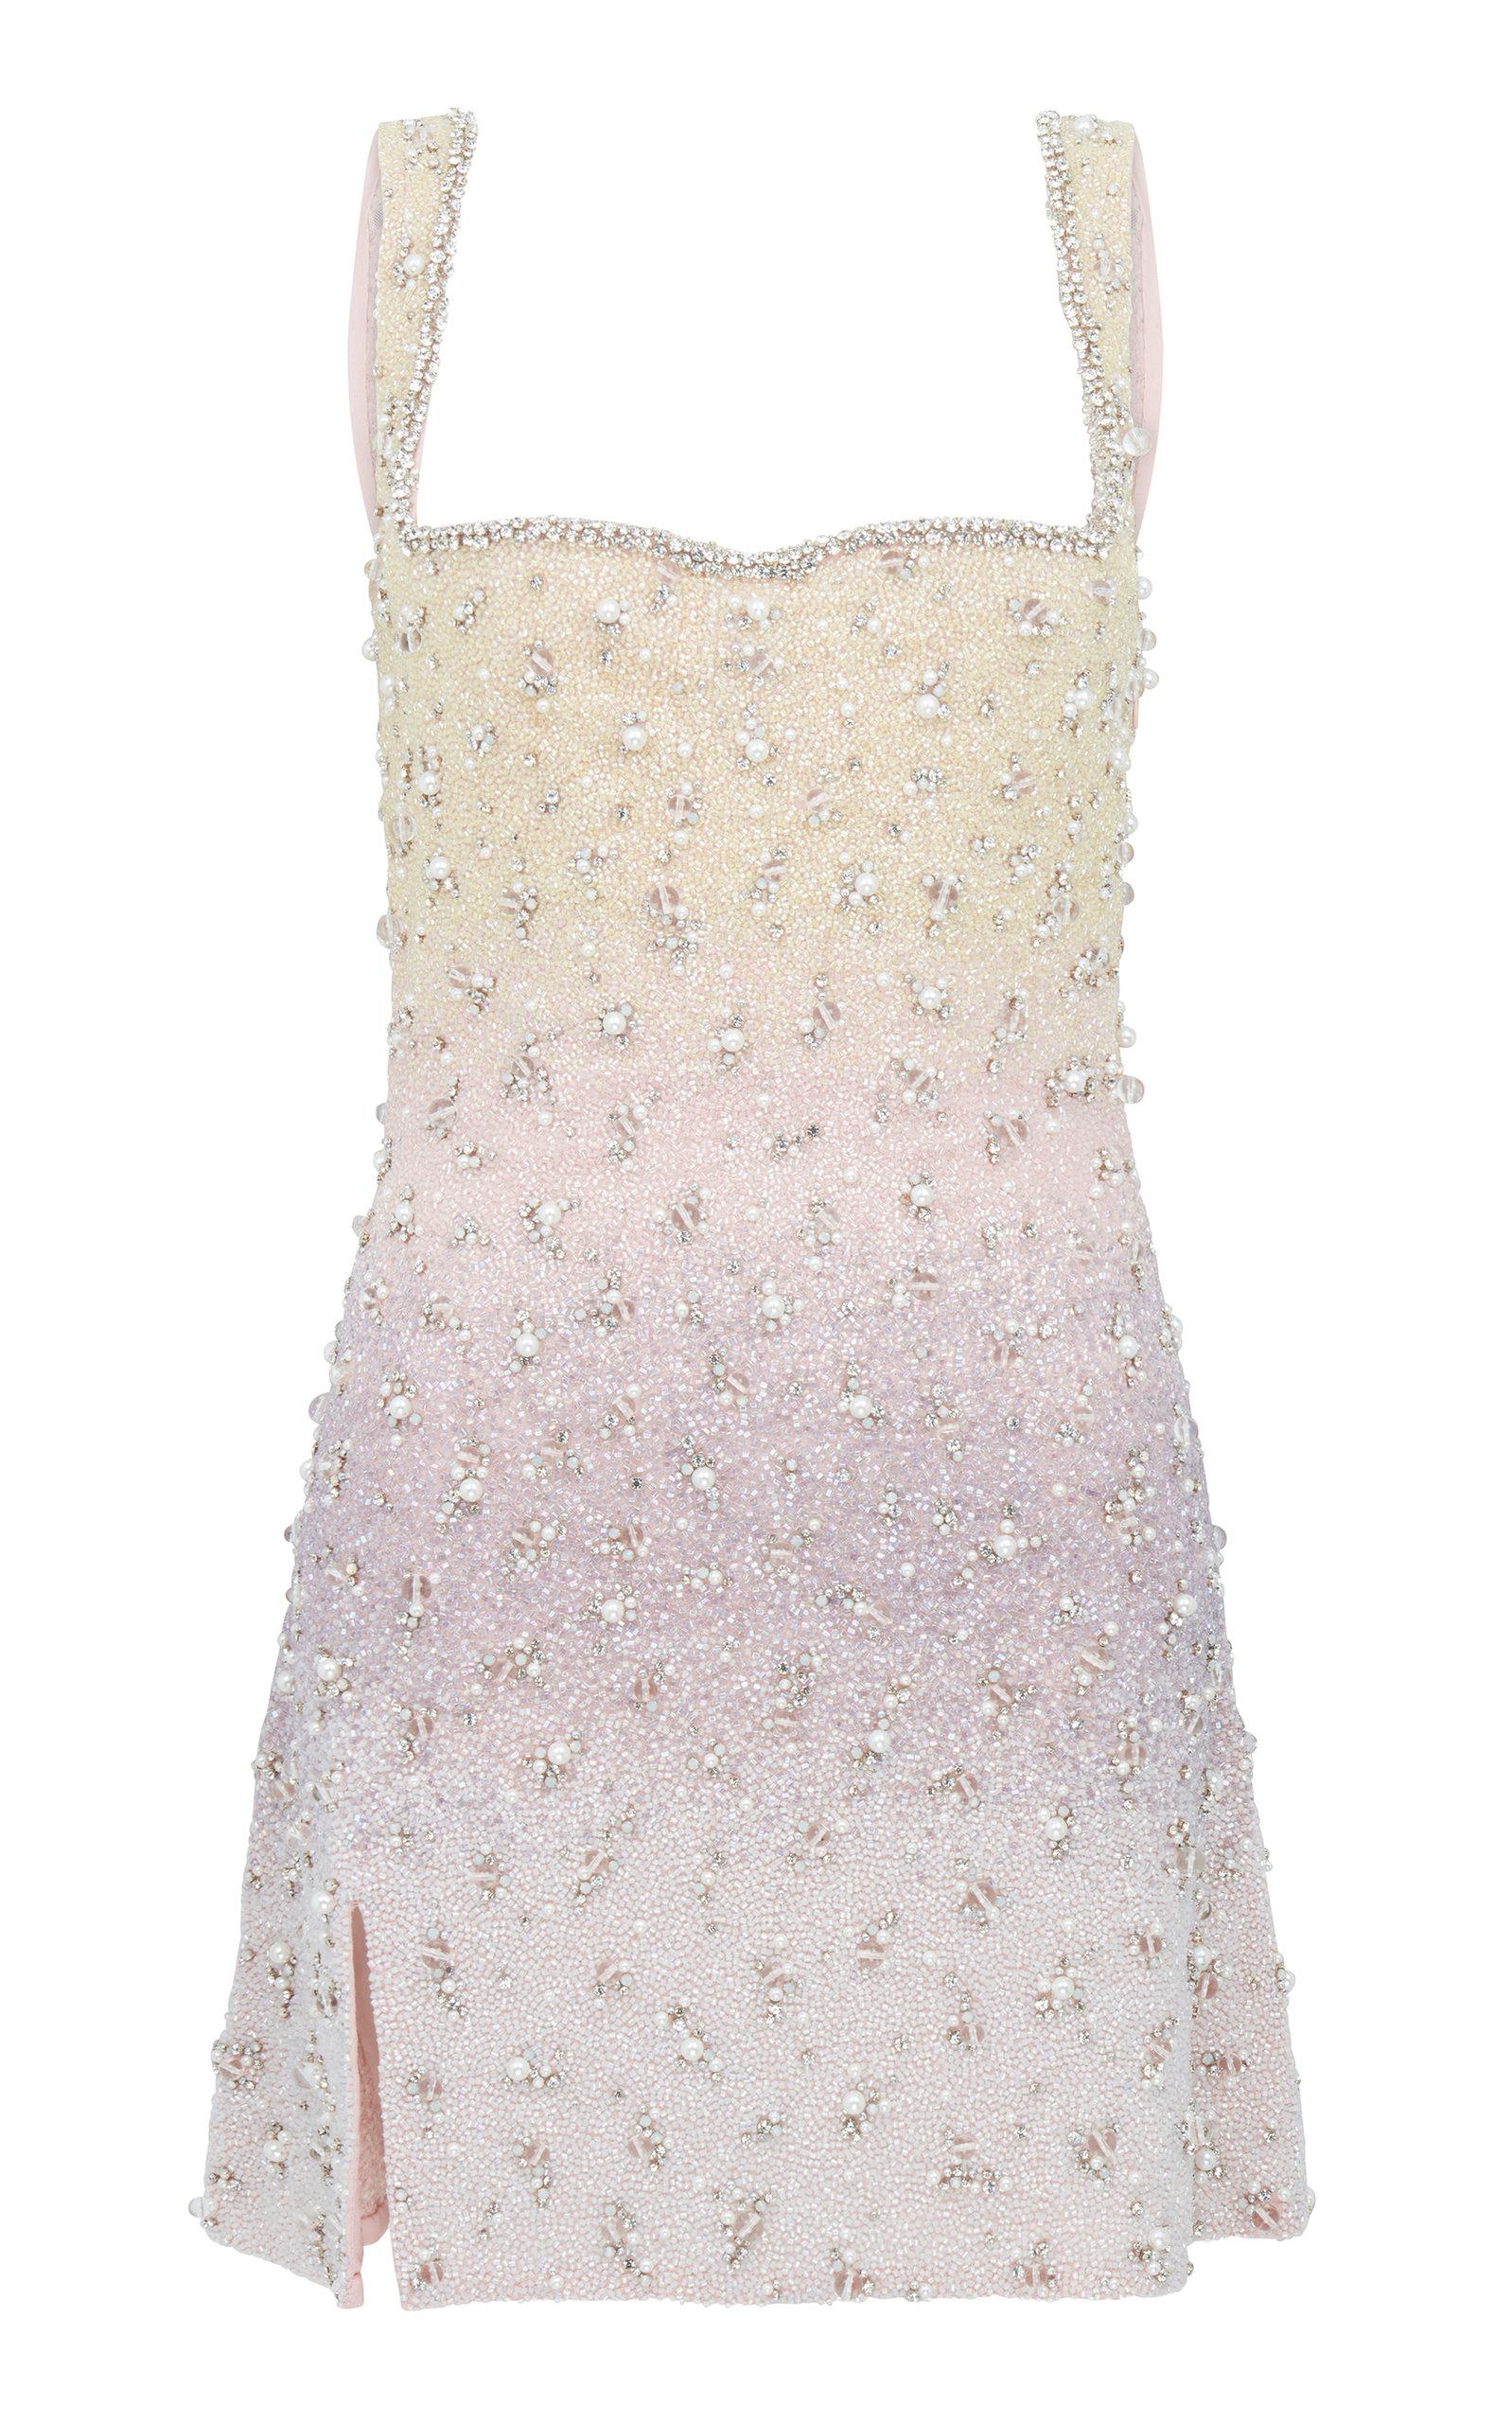 Clio Peppiatt Prism Embellished Mini Dress in White | Lyst